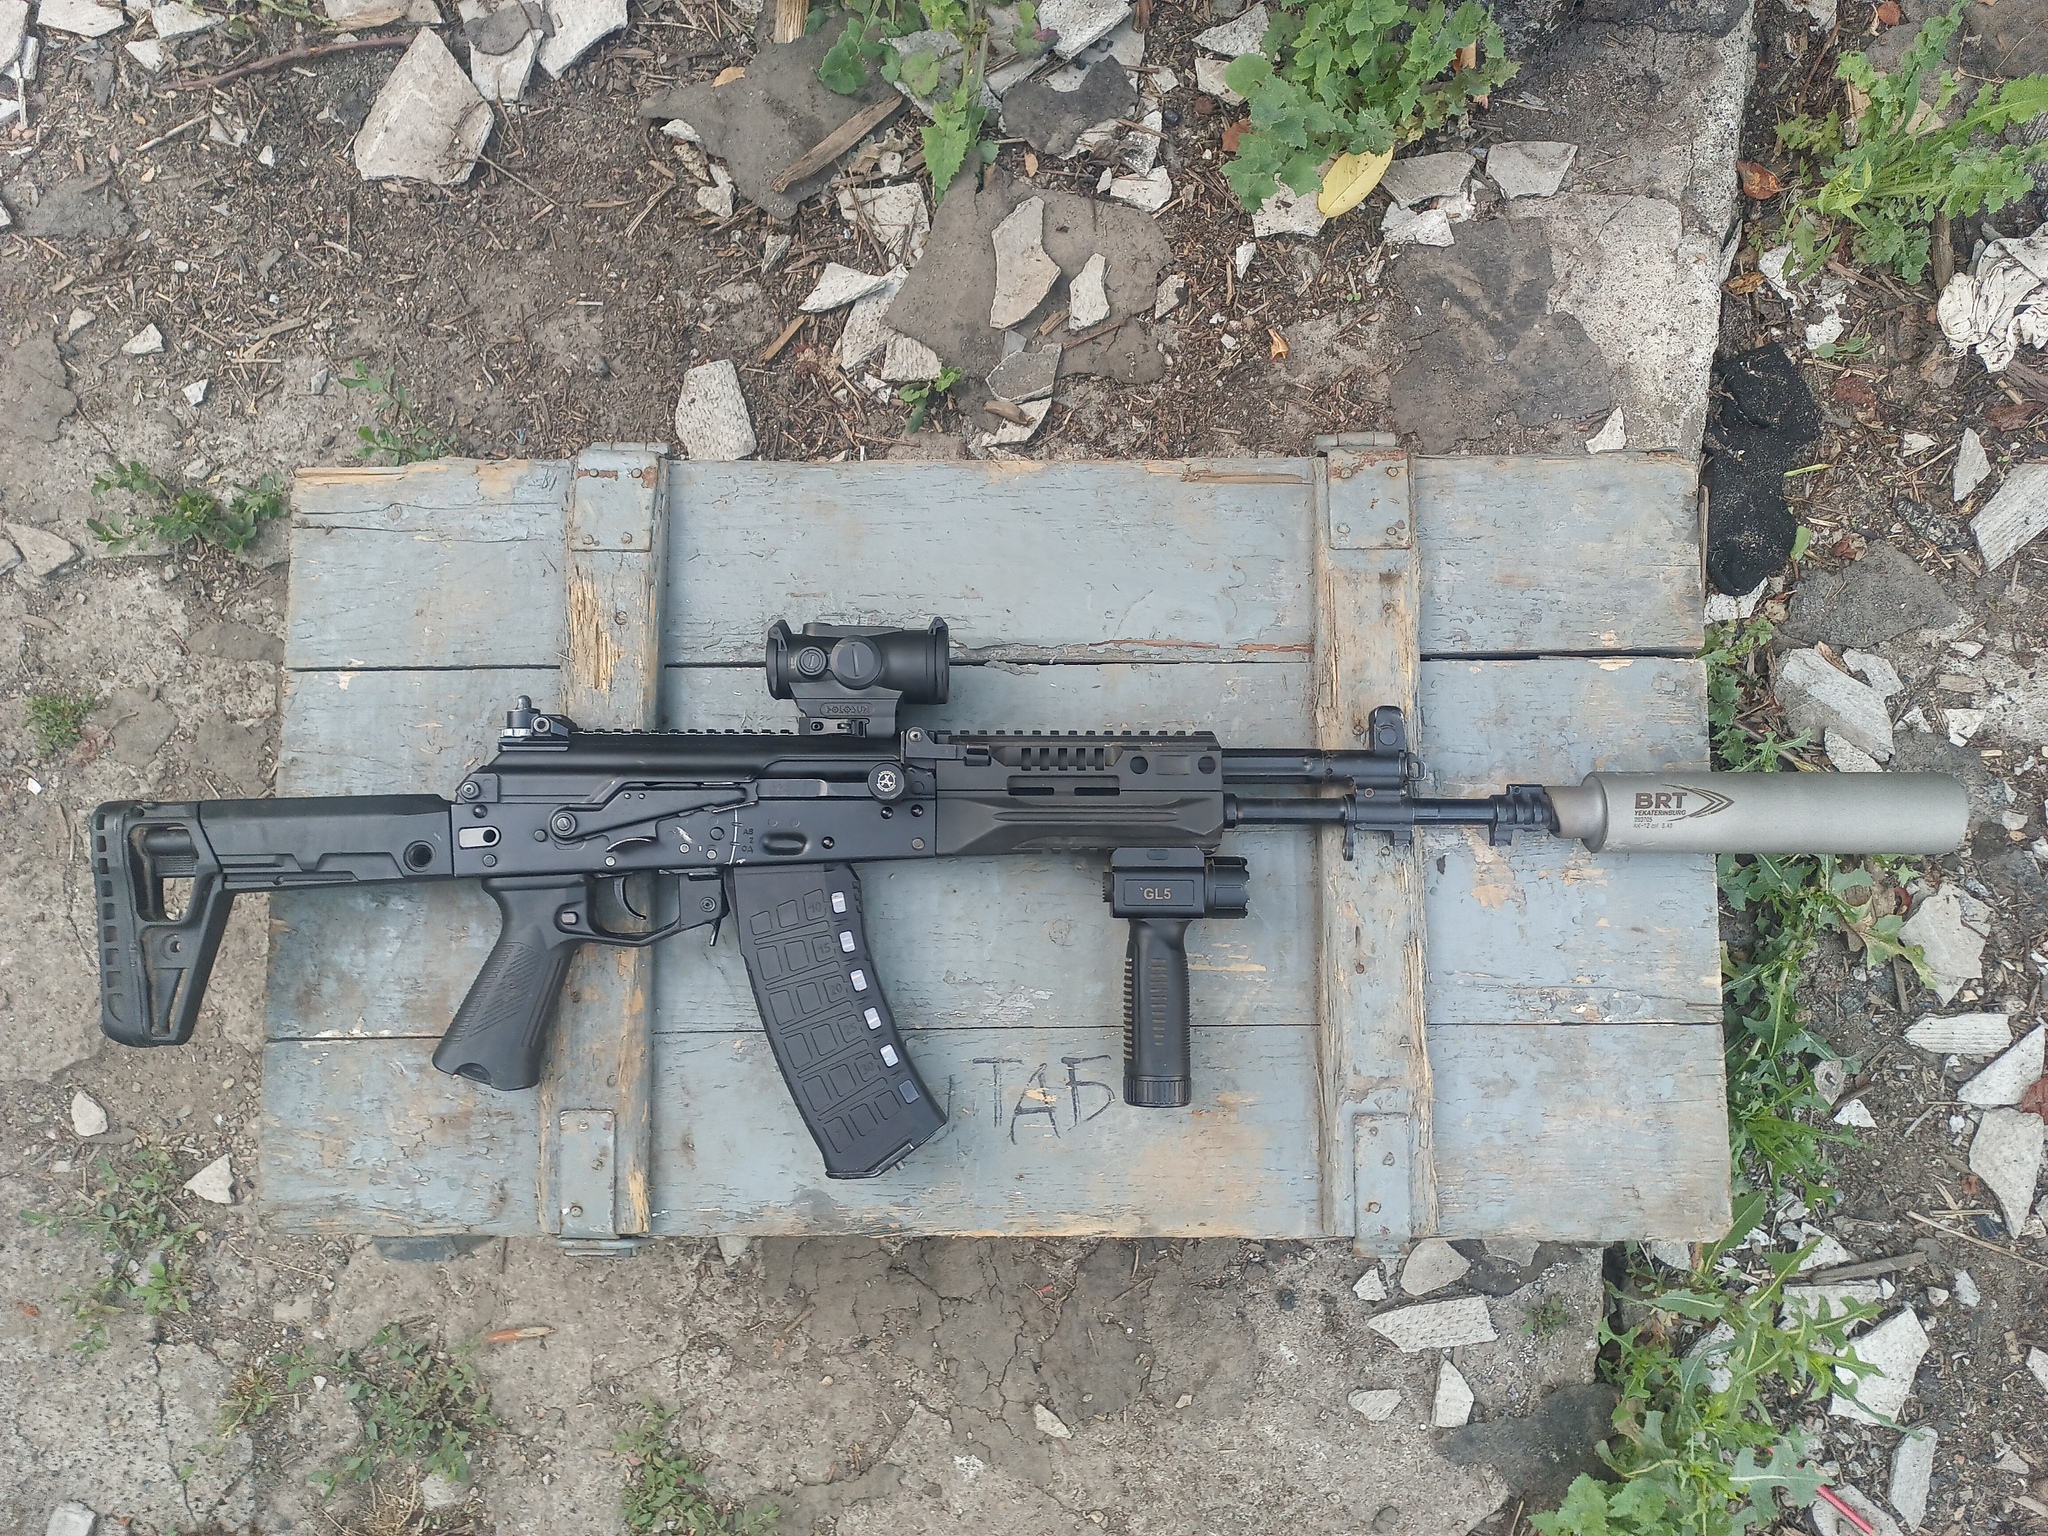 AK-12 Dashka - Firearms, Kalashnikov assault rifle, Special operation